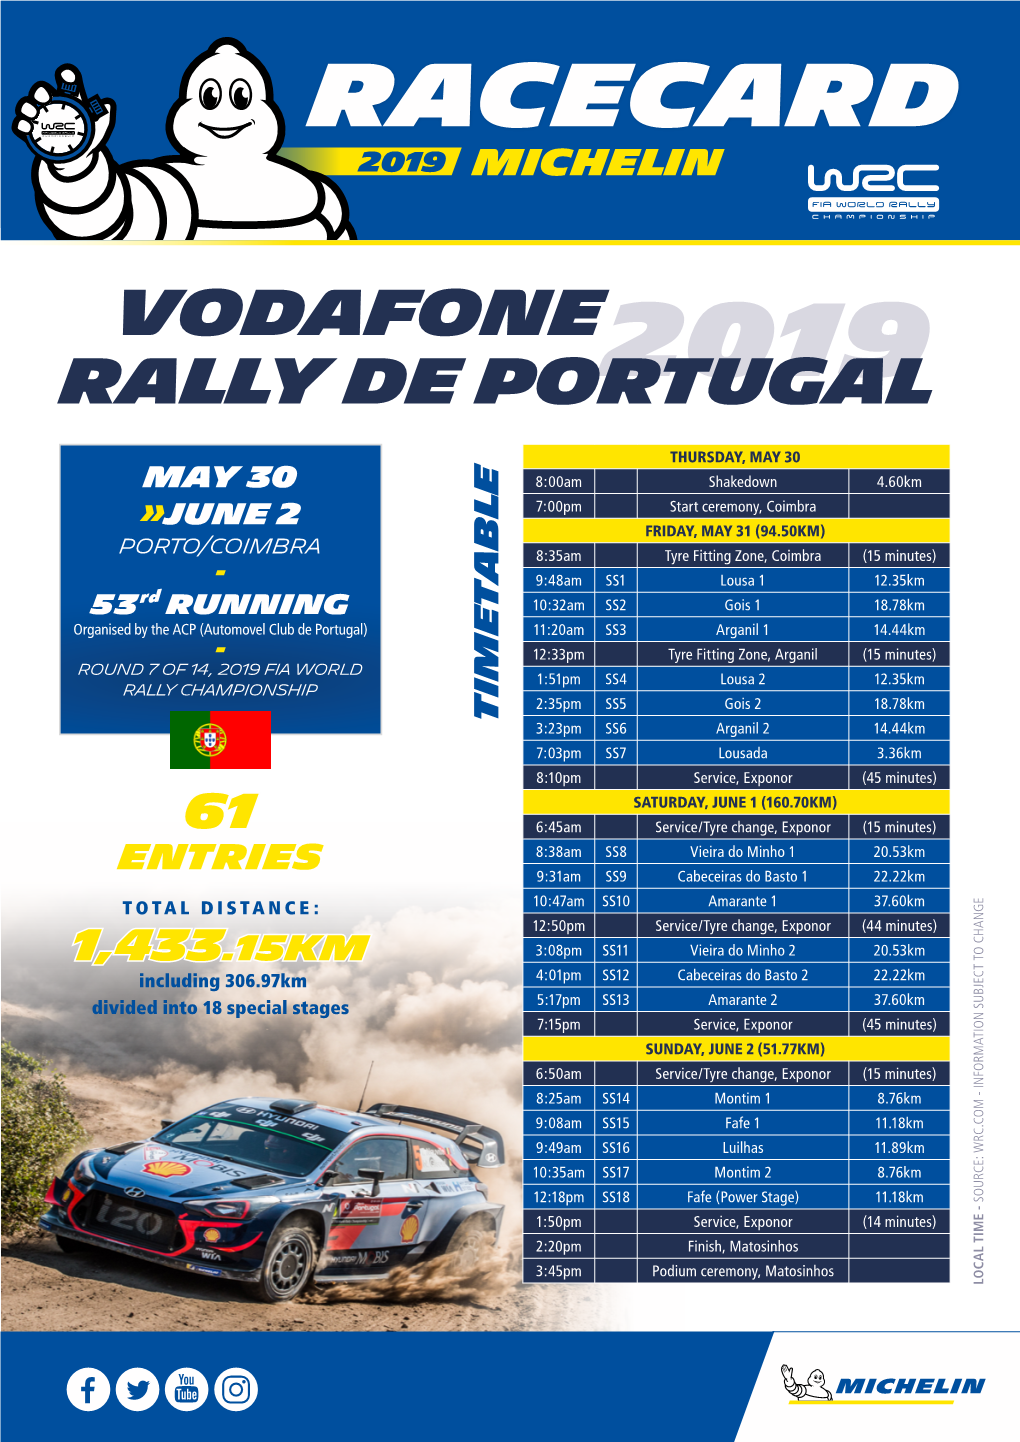 Vodafone Rally De Portugal2019